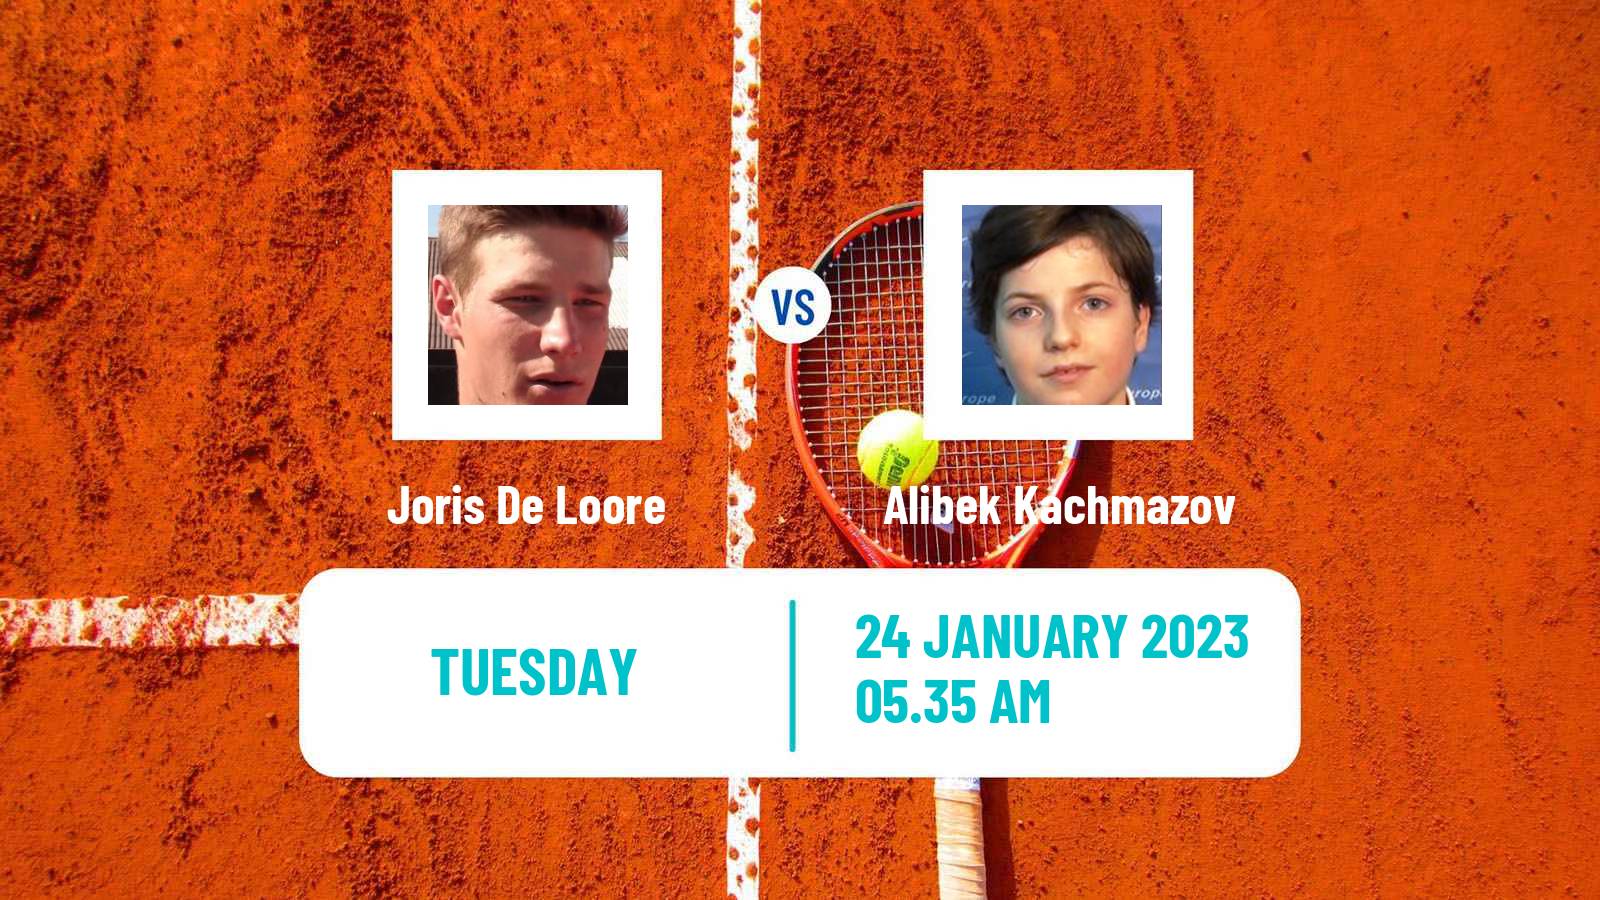 Tennis ATP Challenger Joris De Loore - Alibek Kachmazov